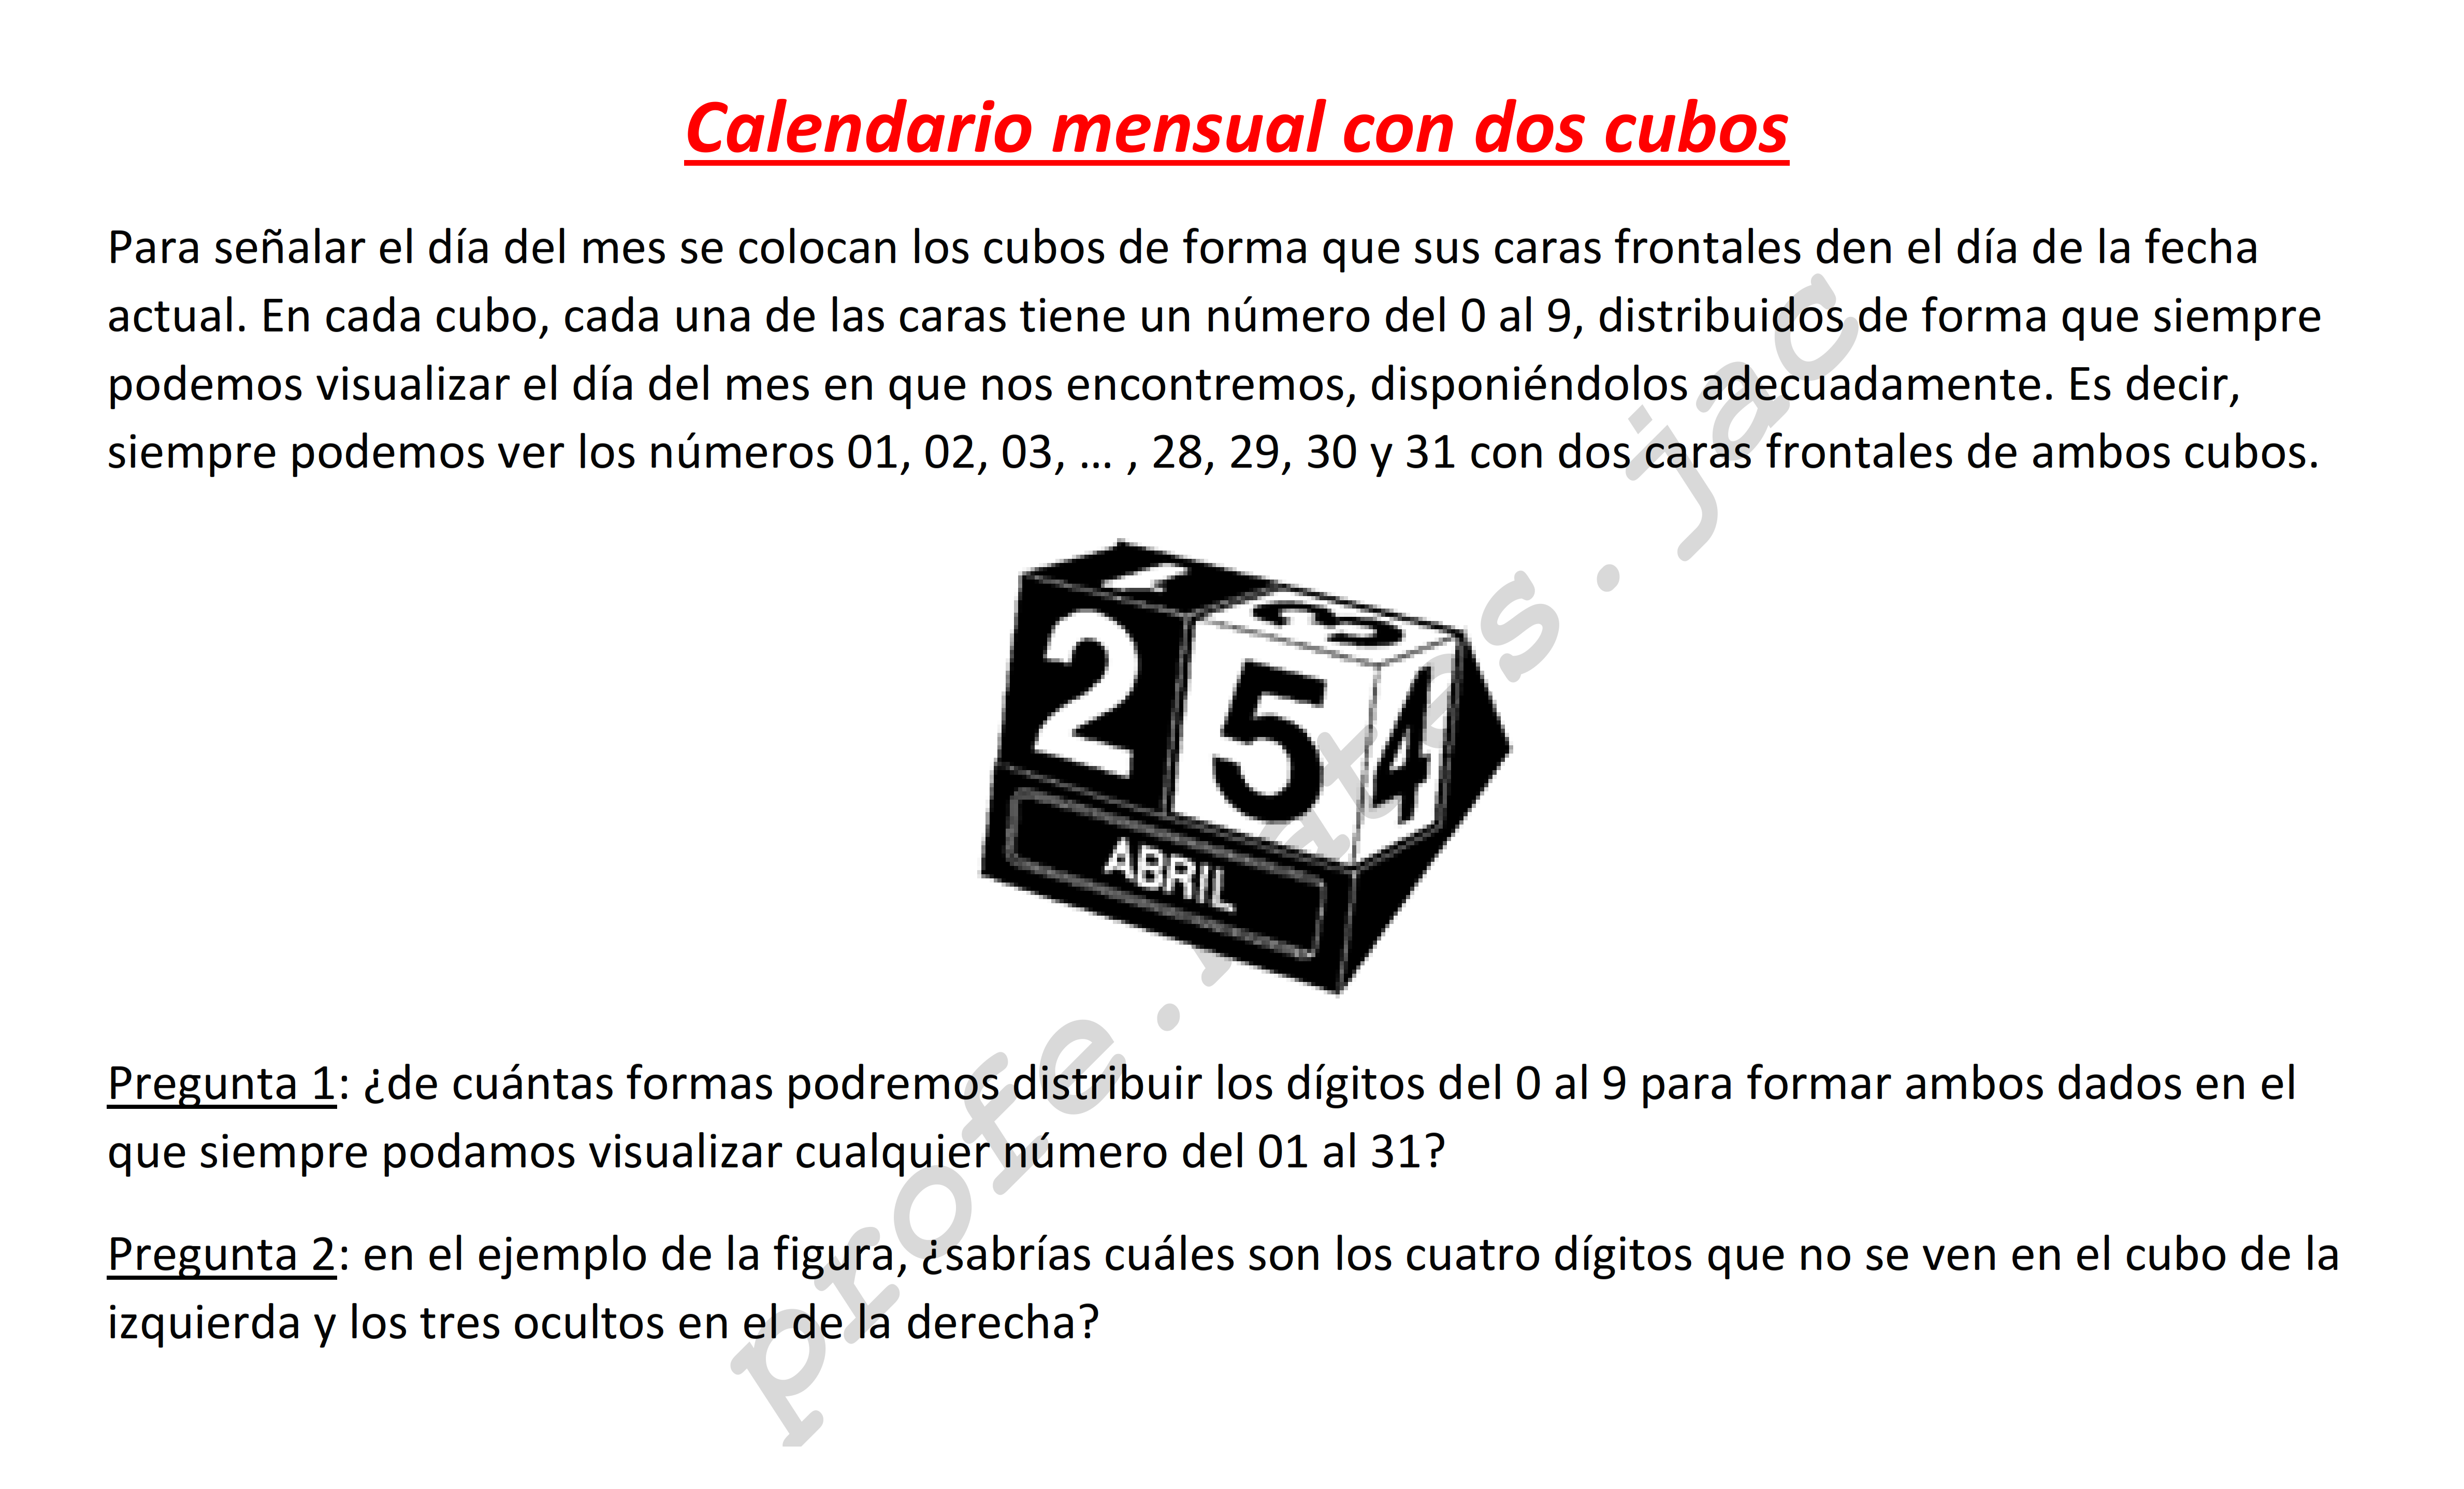 Calendario mensual con dos cubos 2-1_001